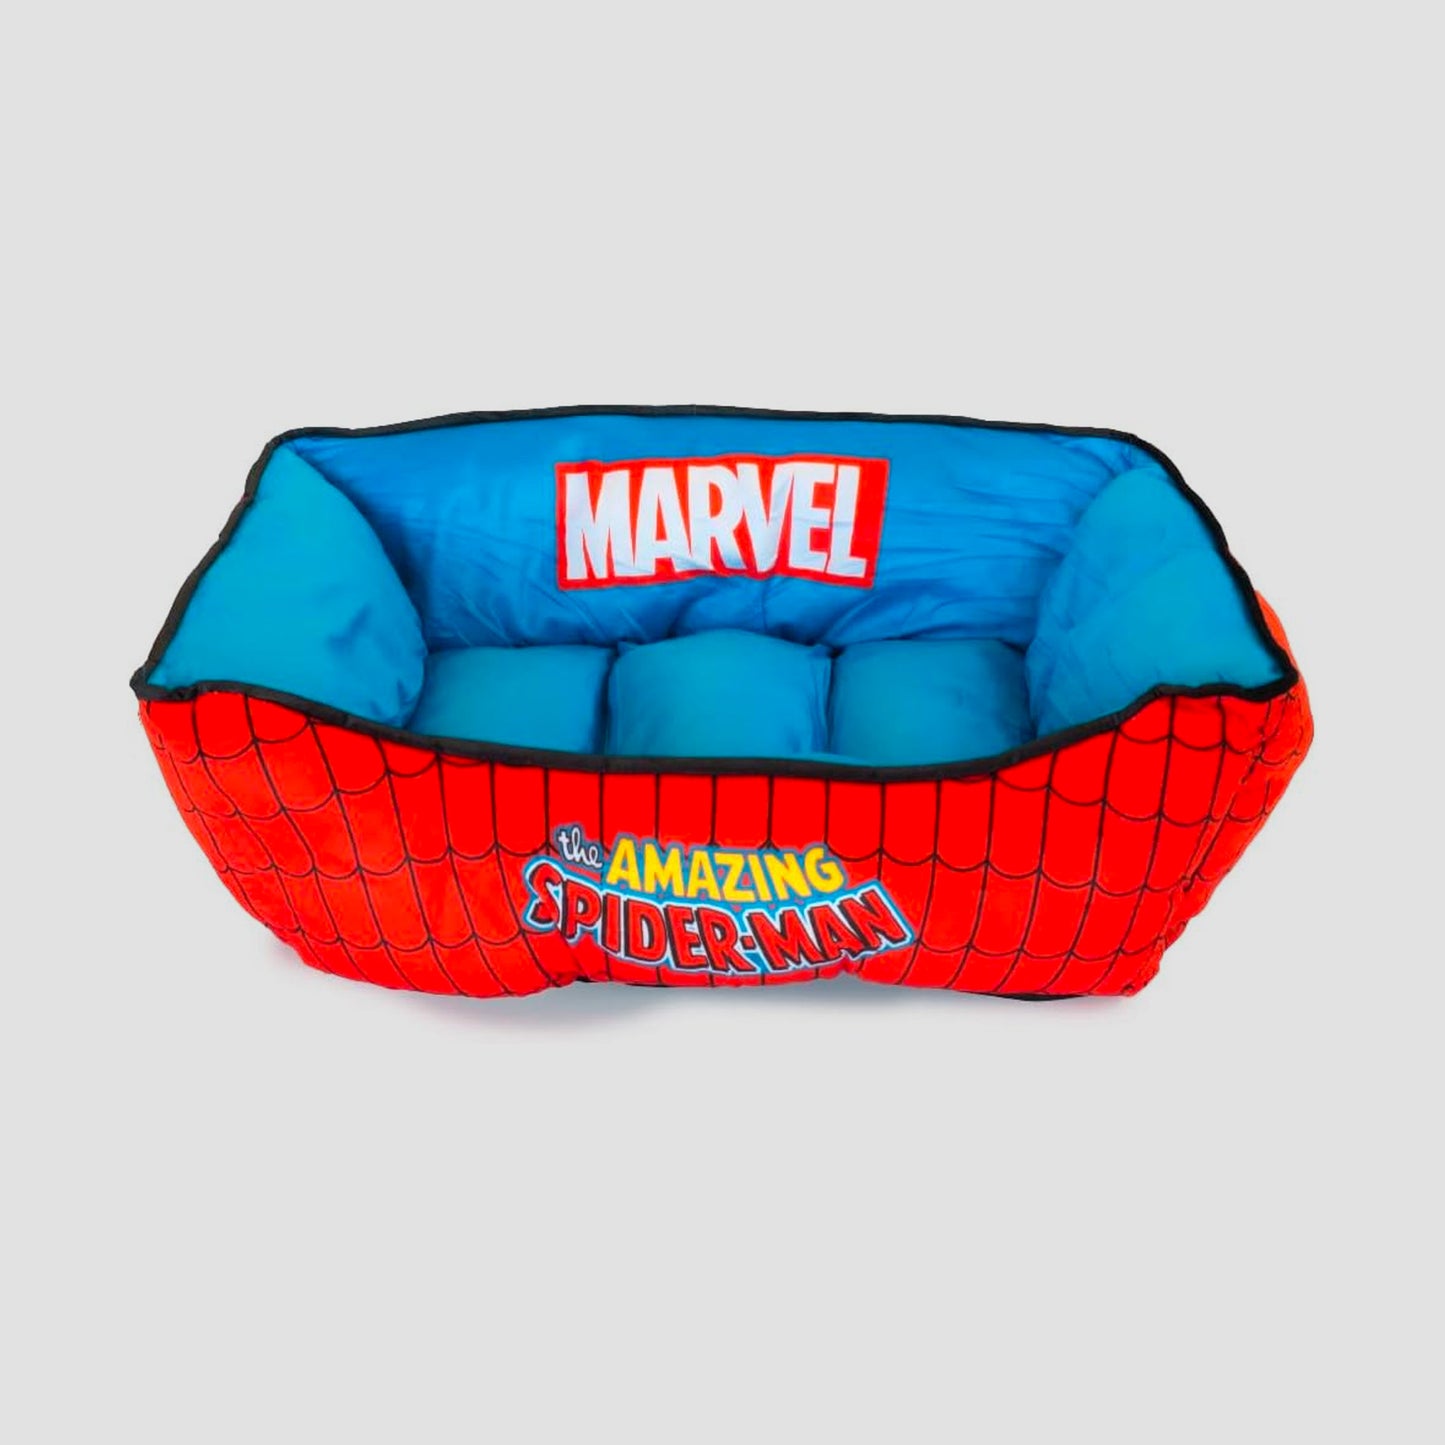 Spider-Man (Marvel) Medium Pet Plush Bed